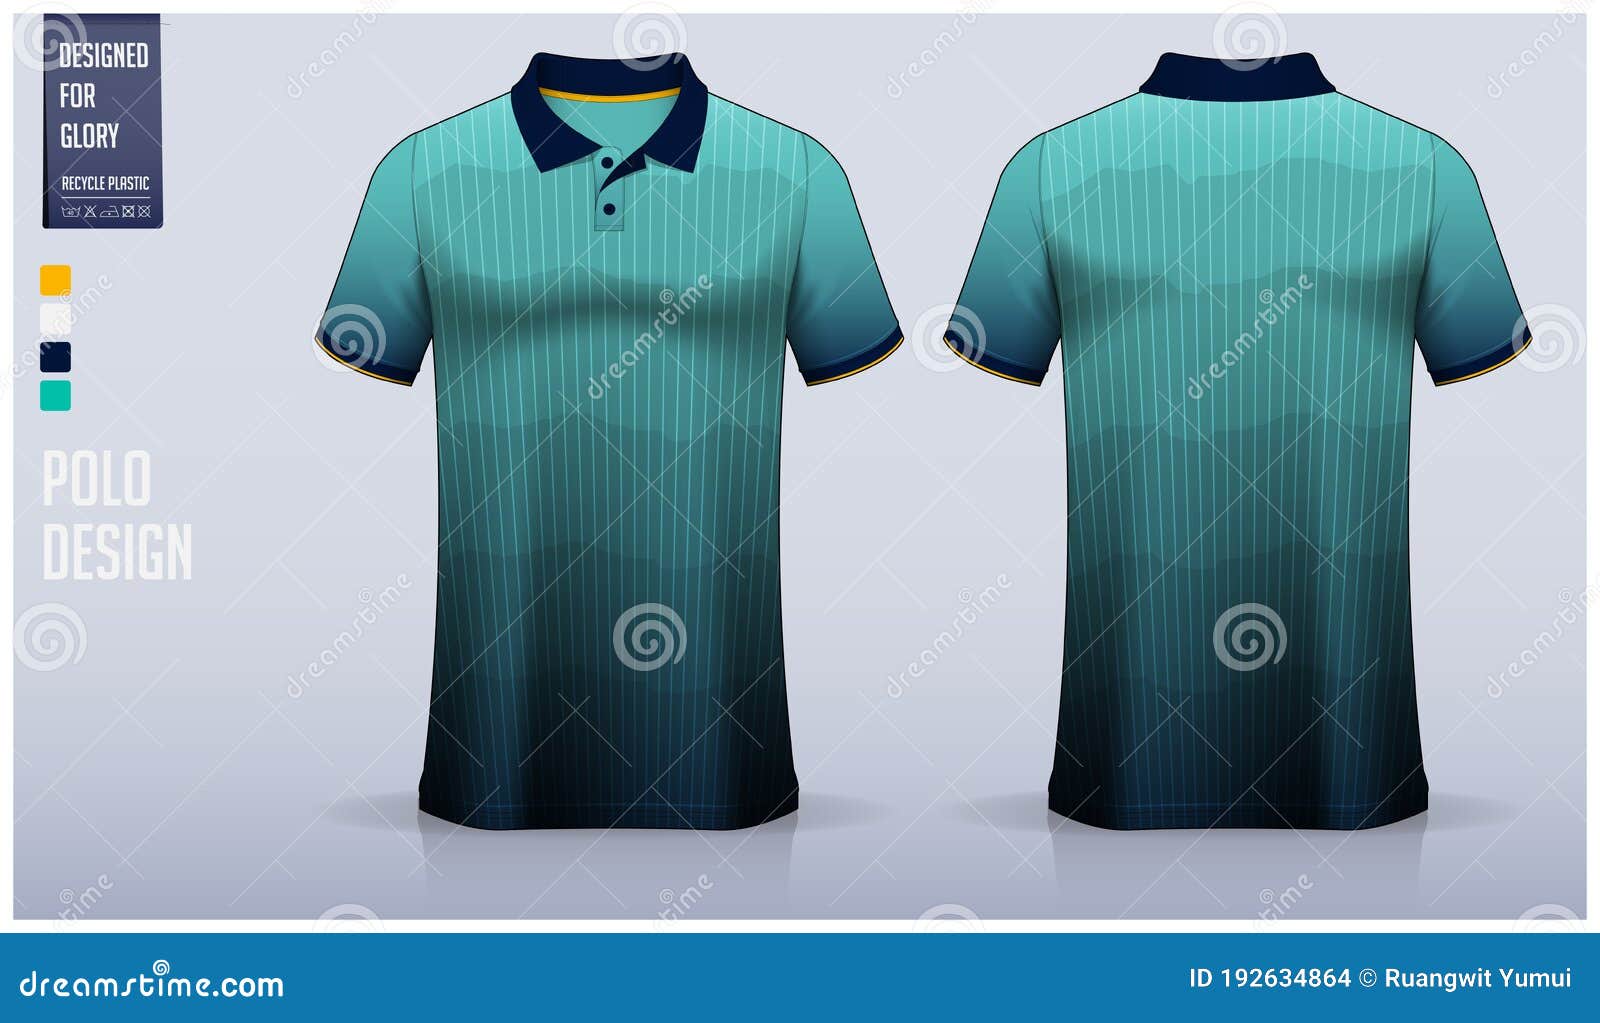 Green Polo Shirt Mockup Template Design for Soccer Jersey, Football Kit ...